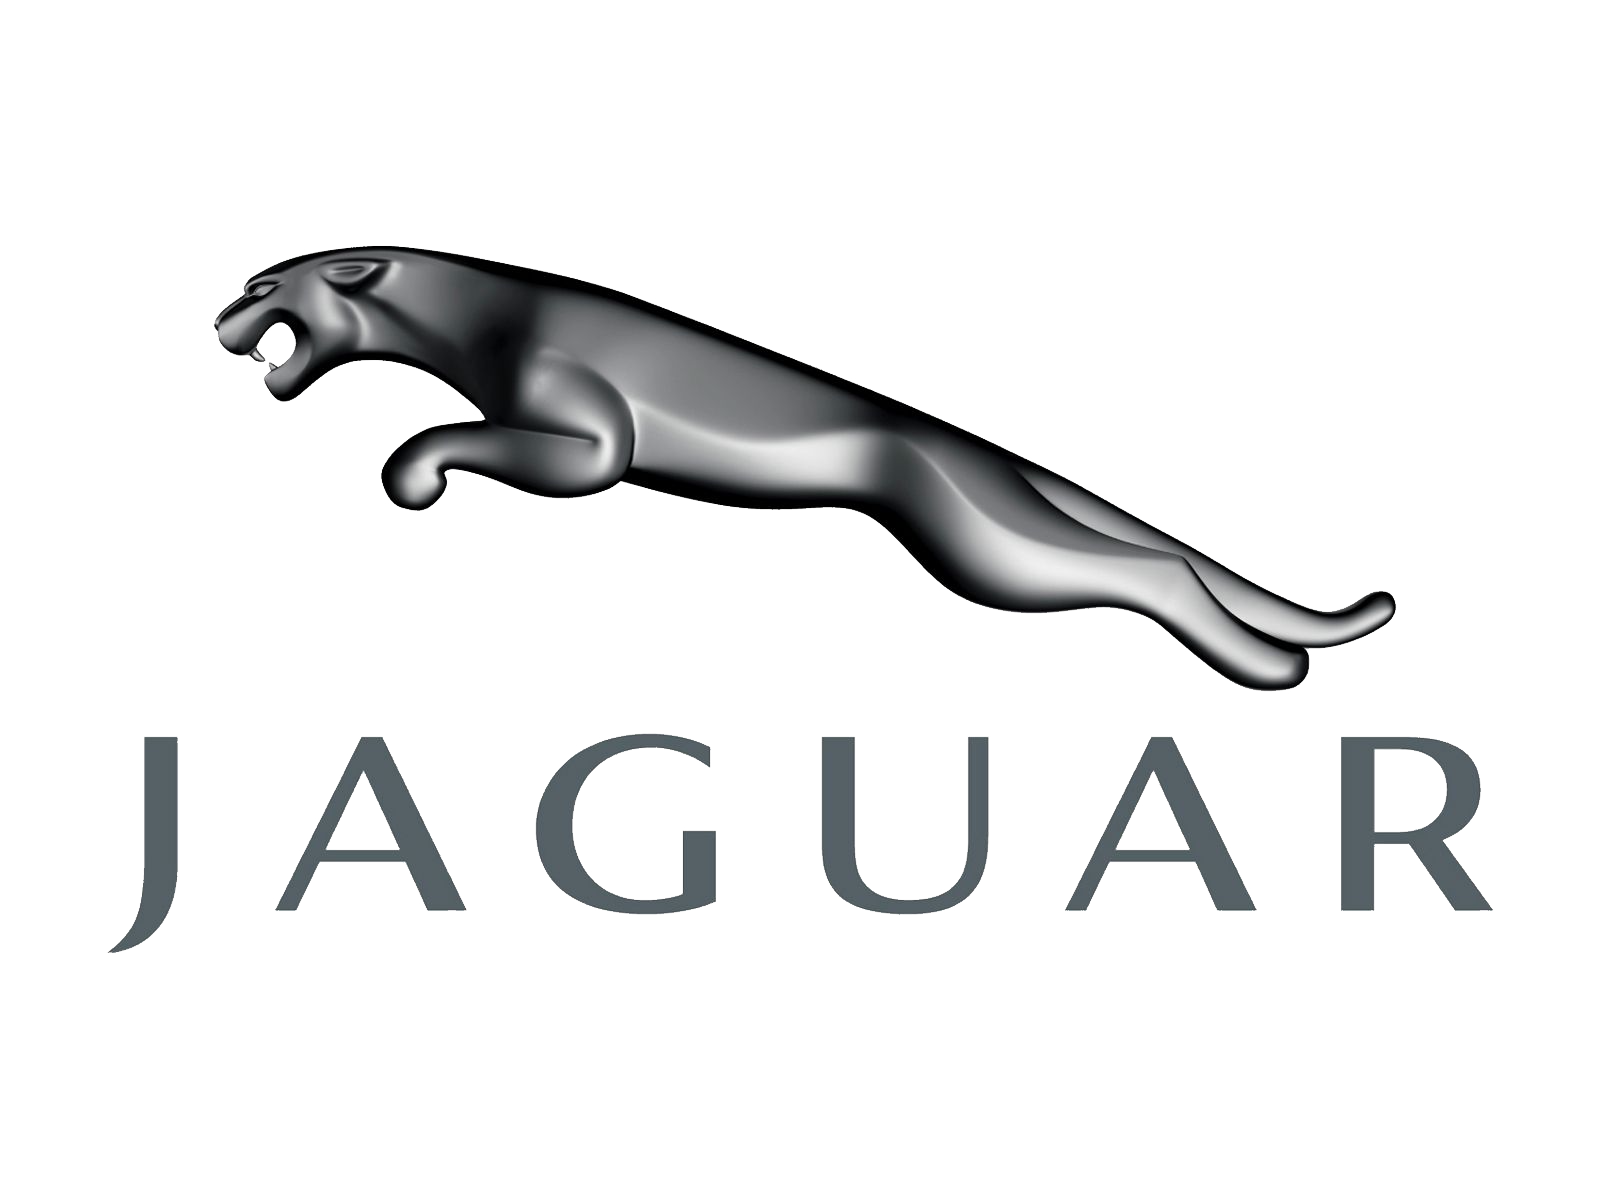 Jaguar Car Logo Png Brand Image   Jaguar Car Logo Png Brand Image